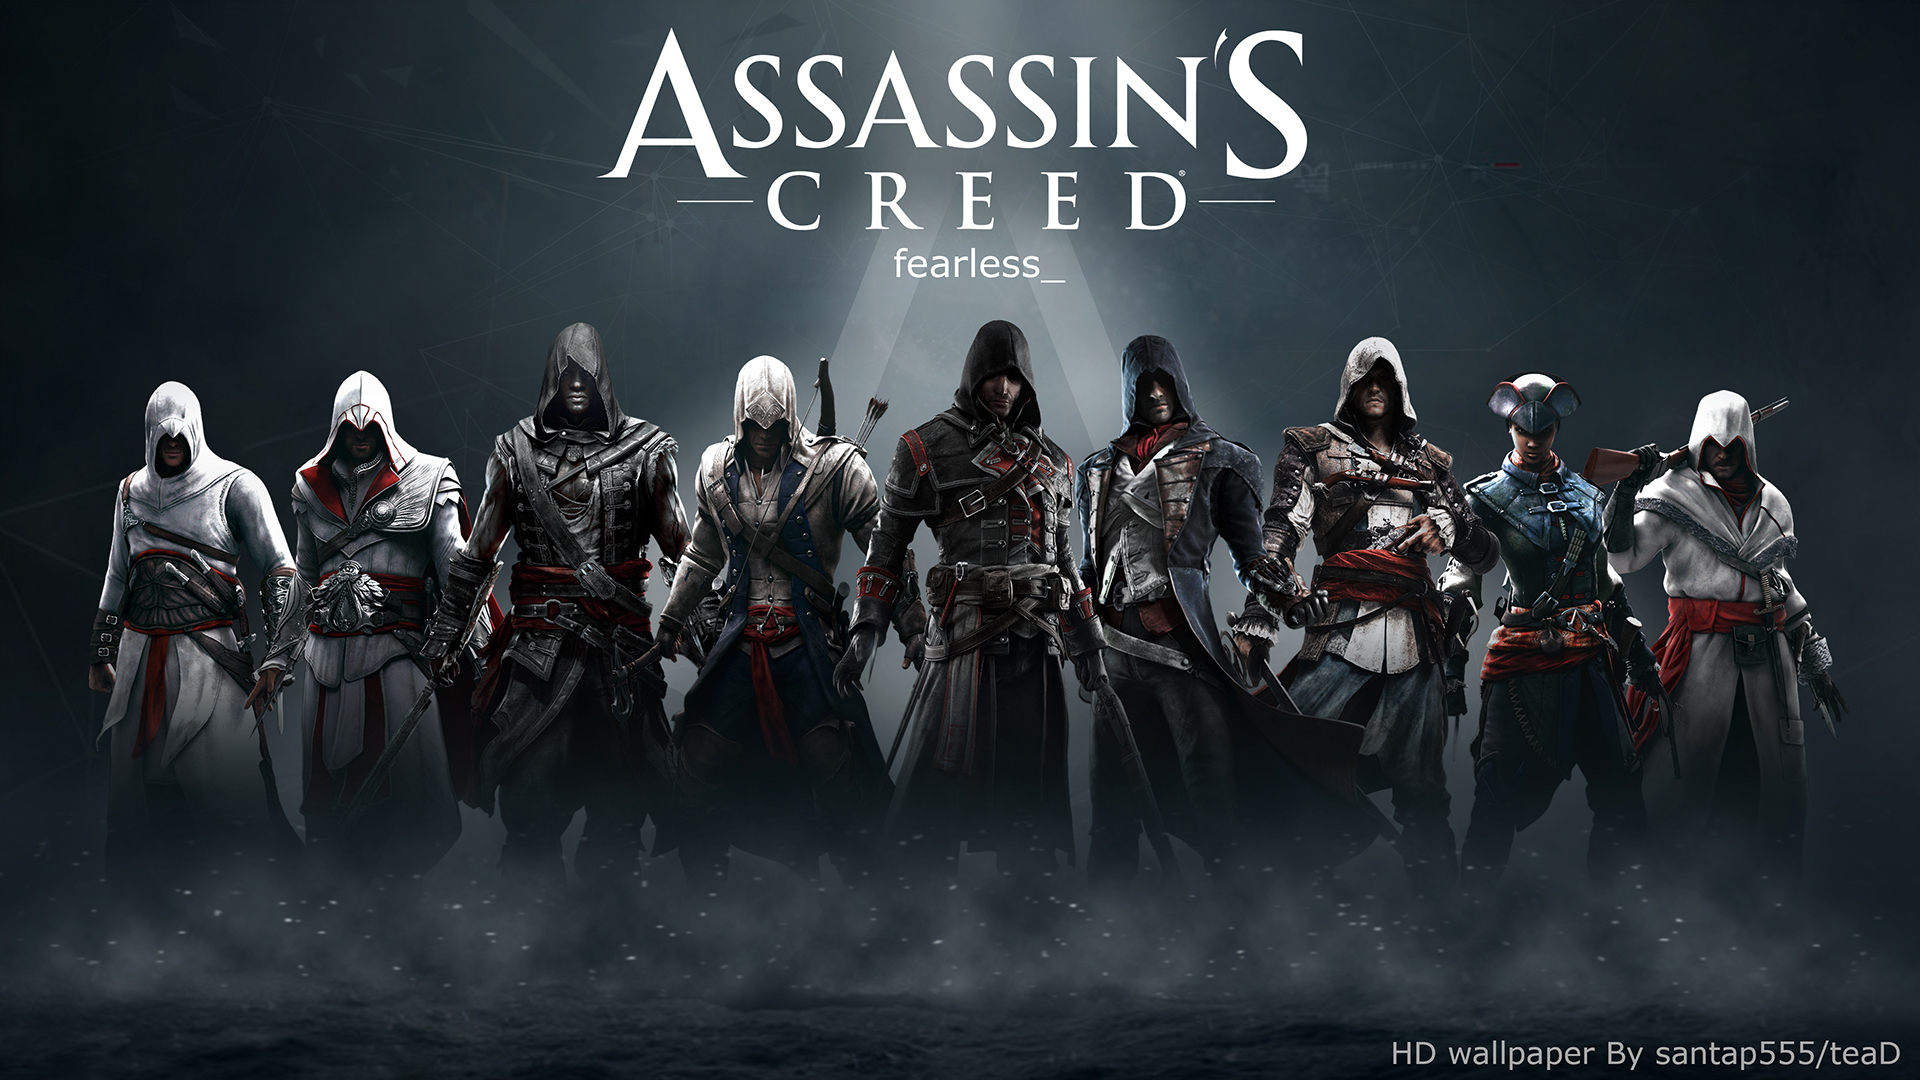 Assassins Creed HD Wallpaper Image